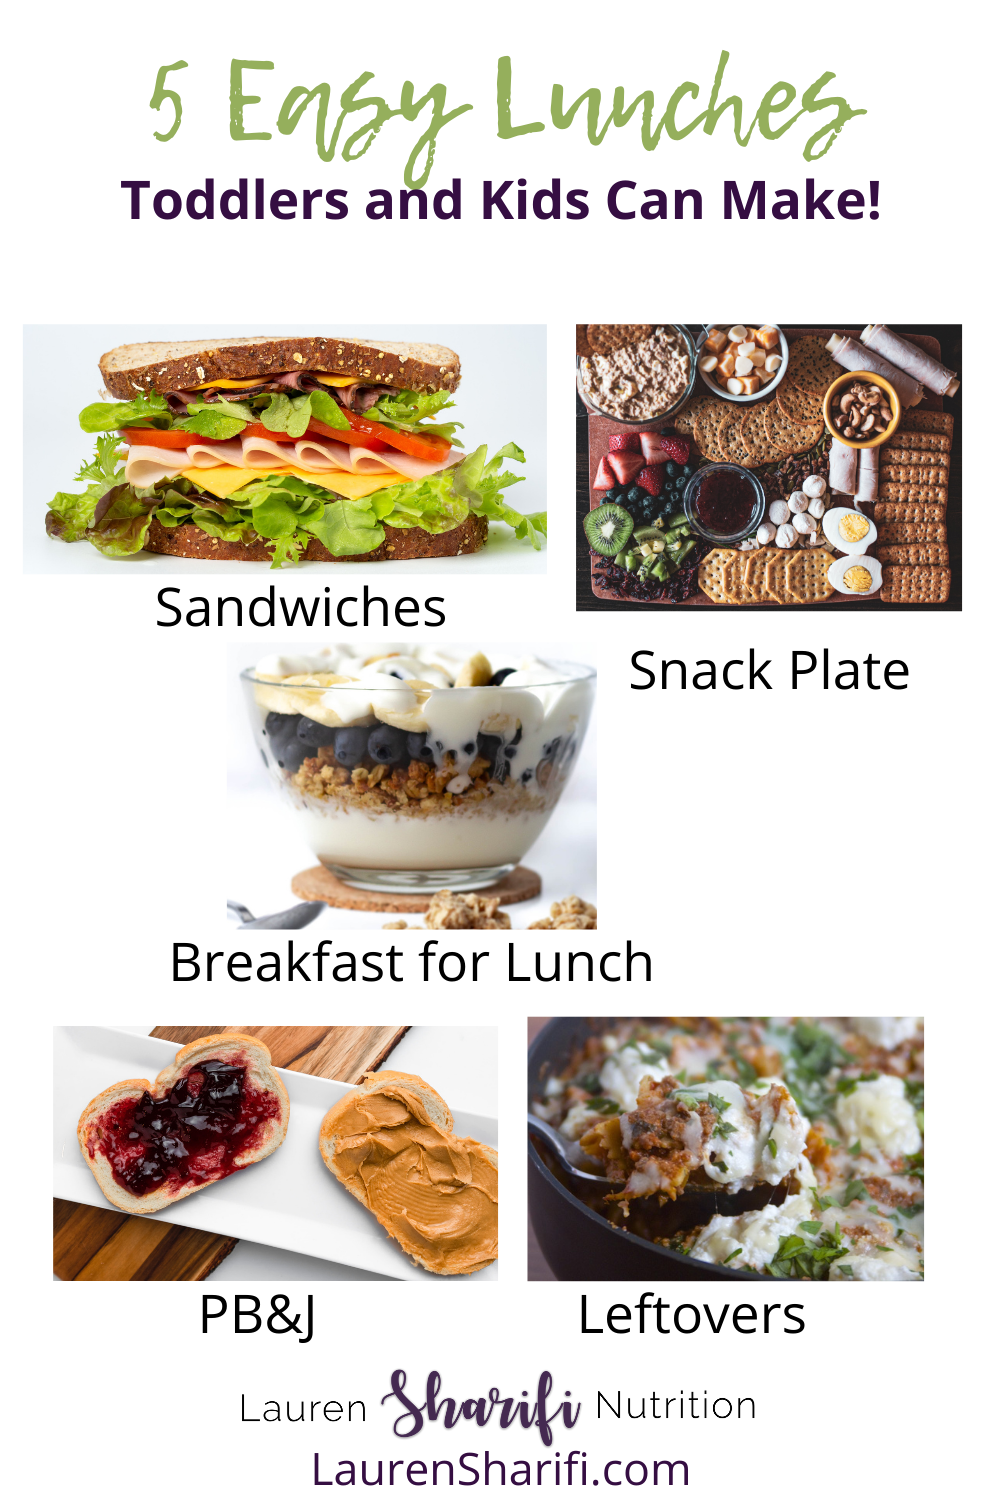 https://laurensharifi.com/wp-content/uploads/2020/10/5-Easy-Lunches-Pin.png